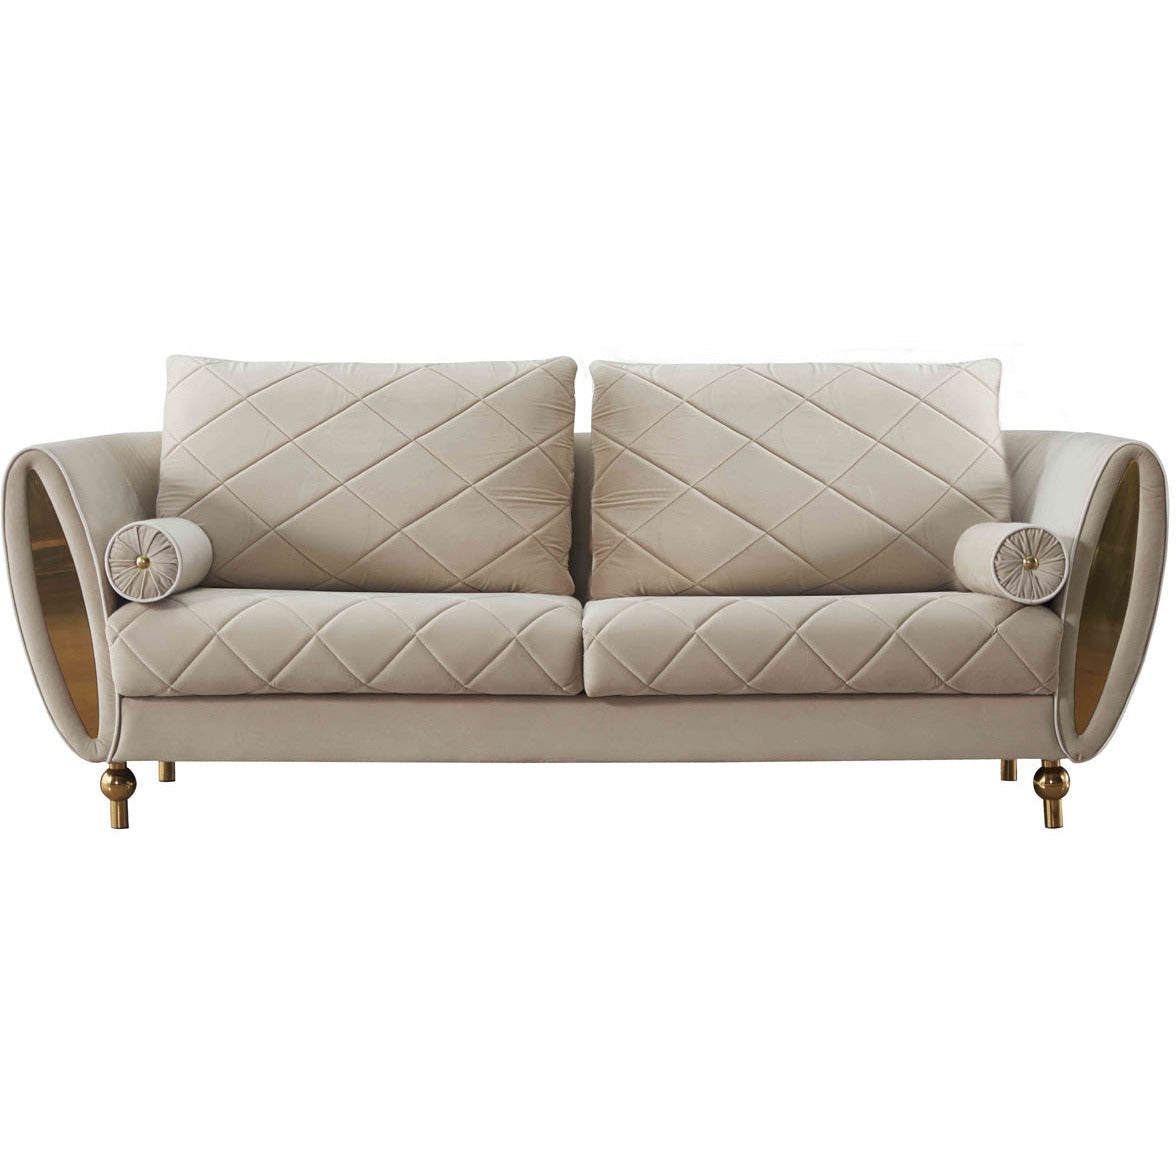 European Furniture - Sipario Vita Sofa in Beige - 22562-S - New Star Living